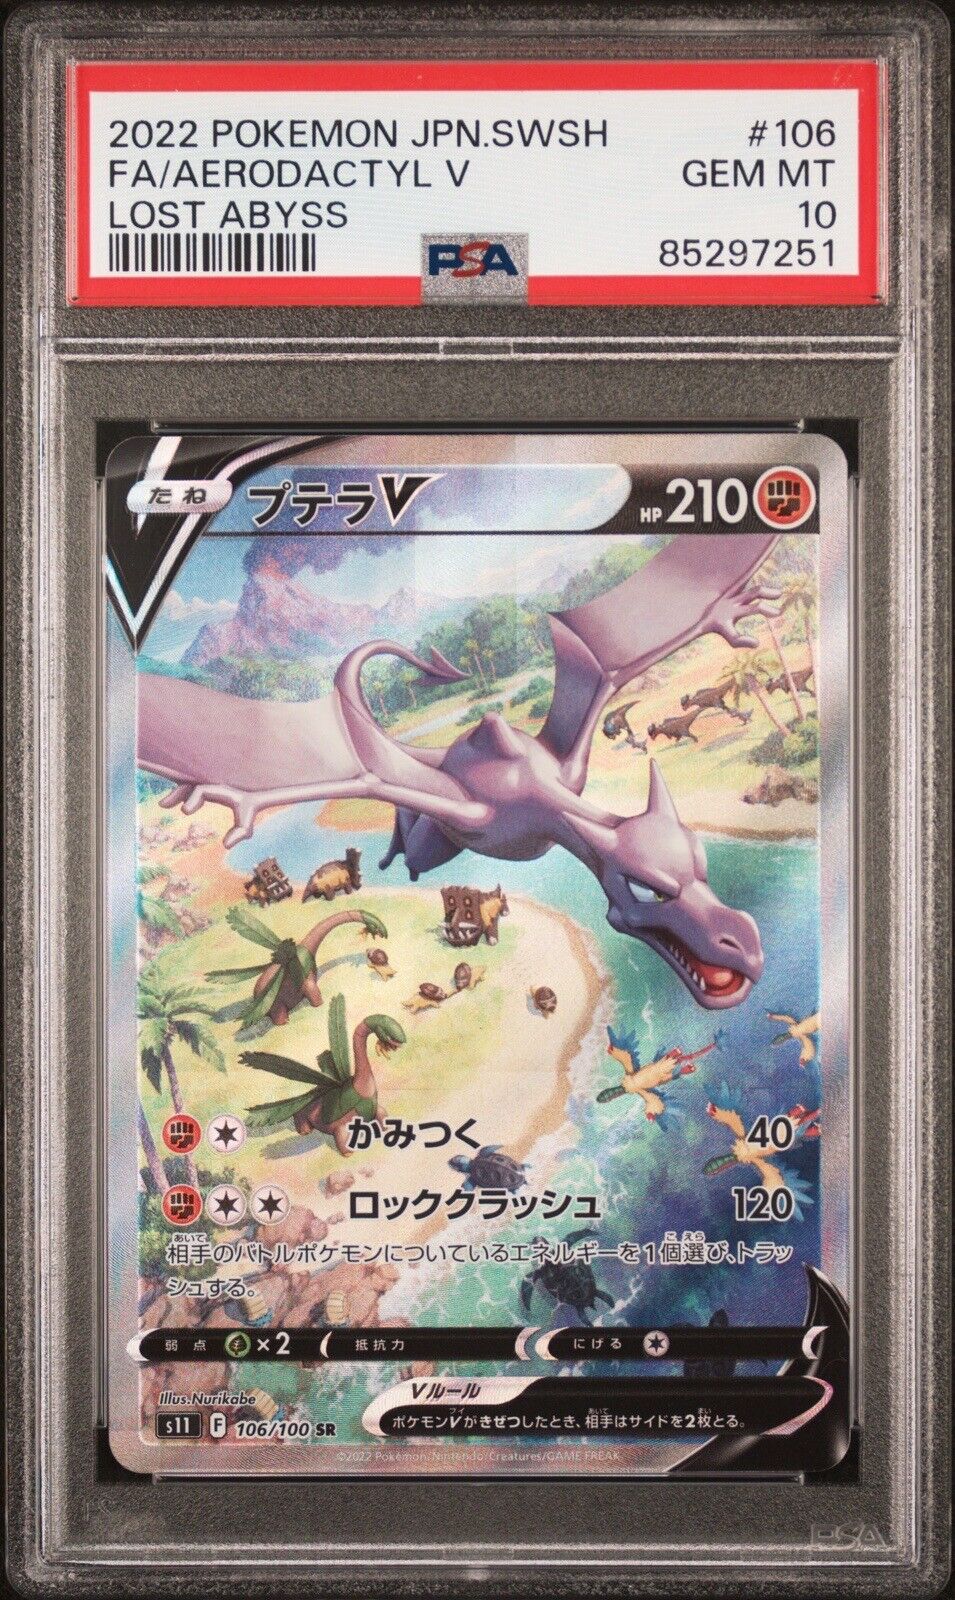 PSA 10 Aerodactyl V 106/100 AR Lost Abyss S11 Japanese Pokemon Card GEM MINT